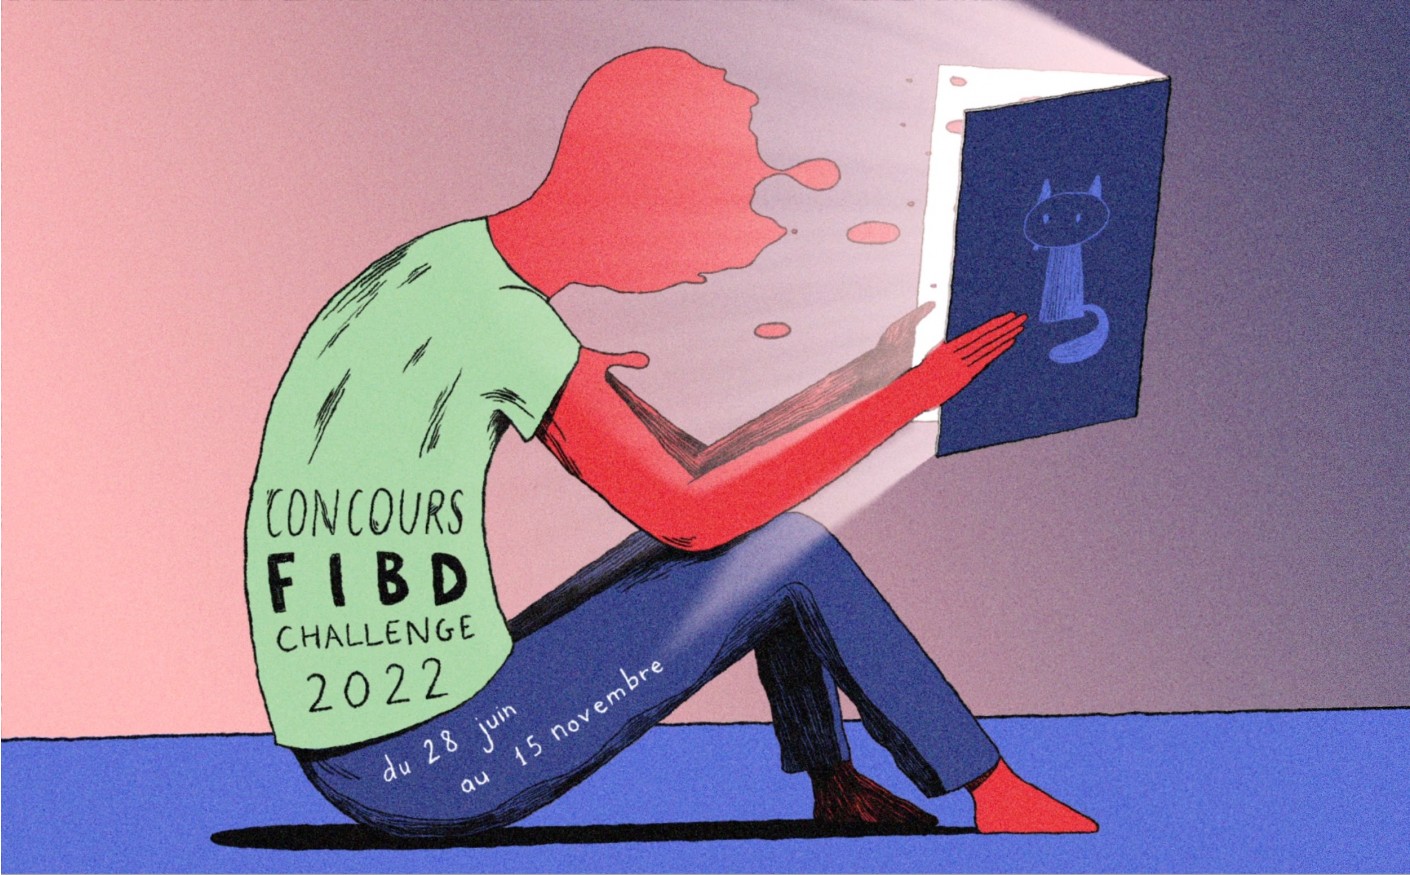 FIBDchallenge 2022